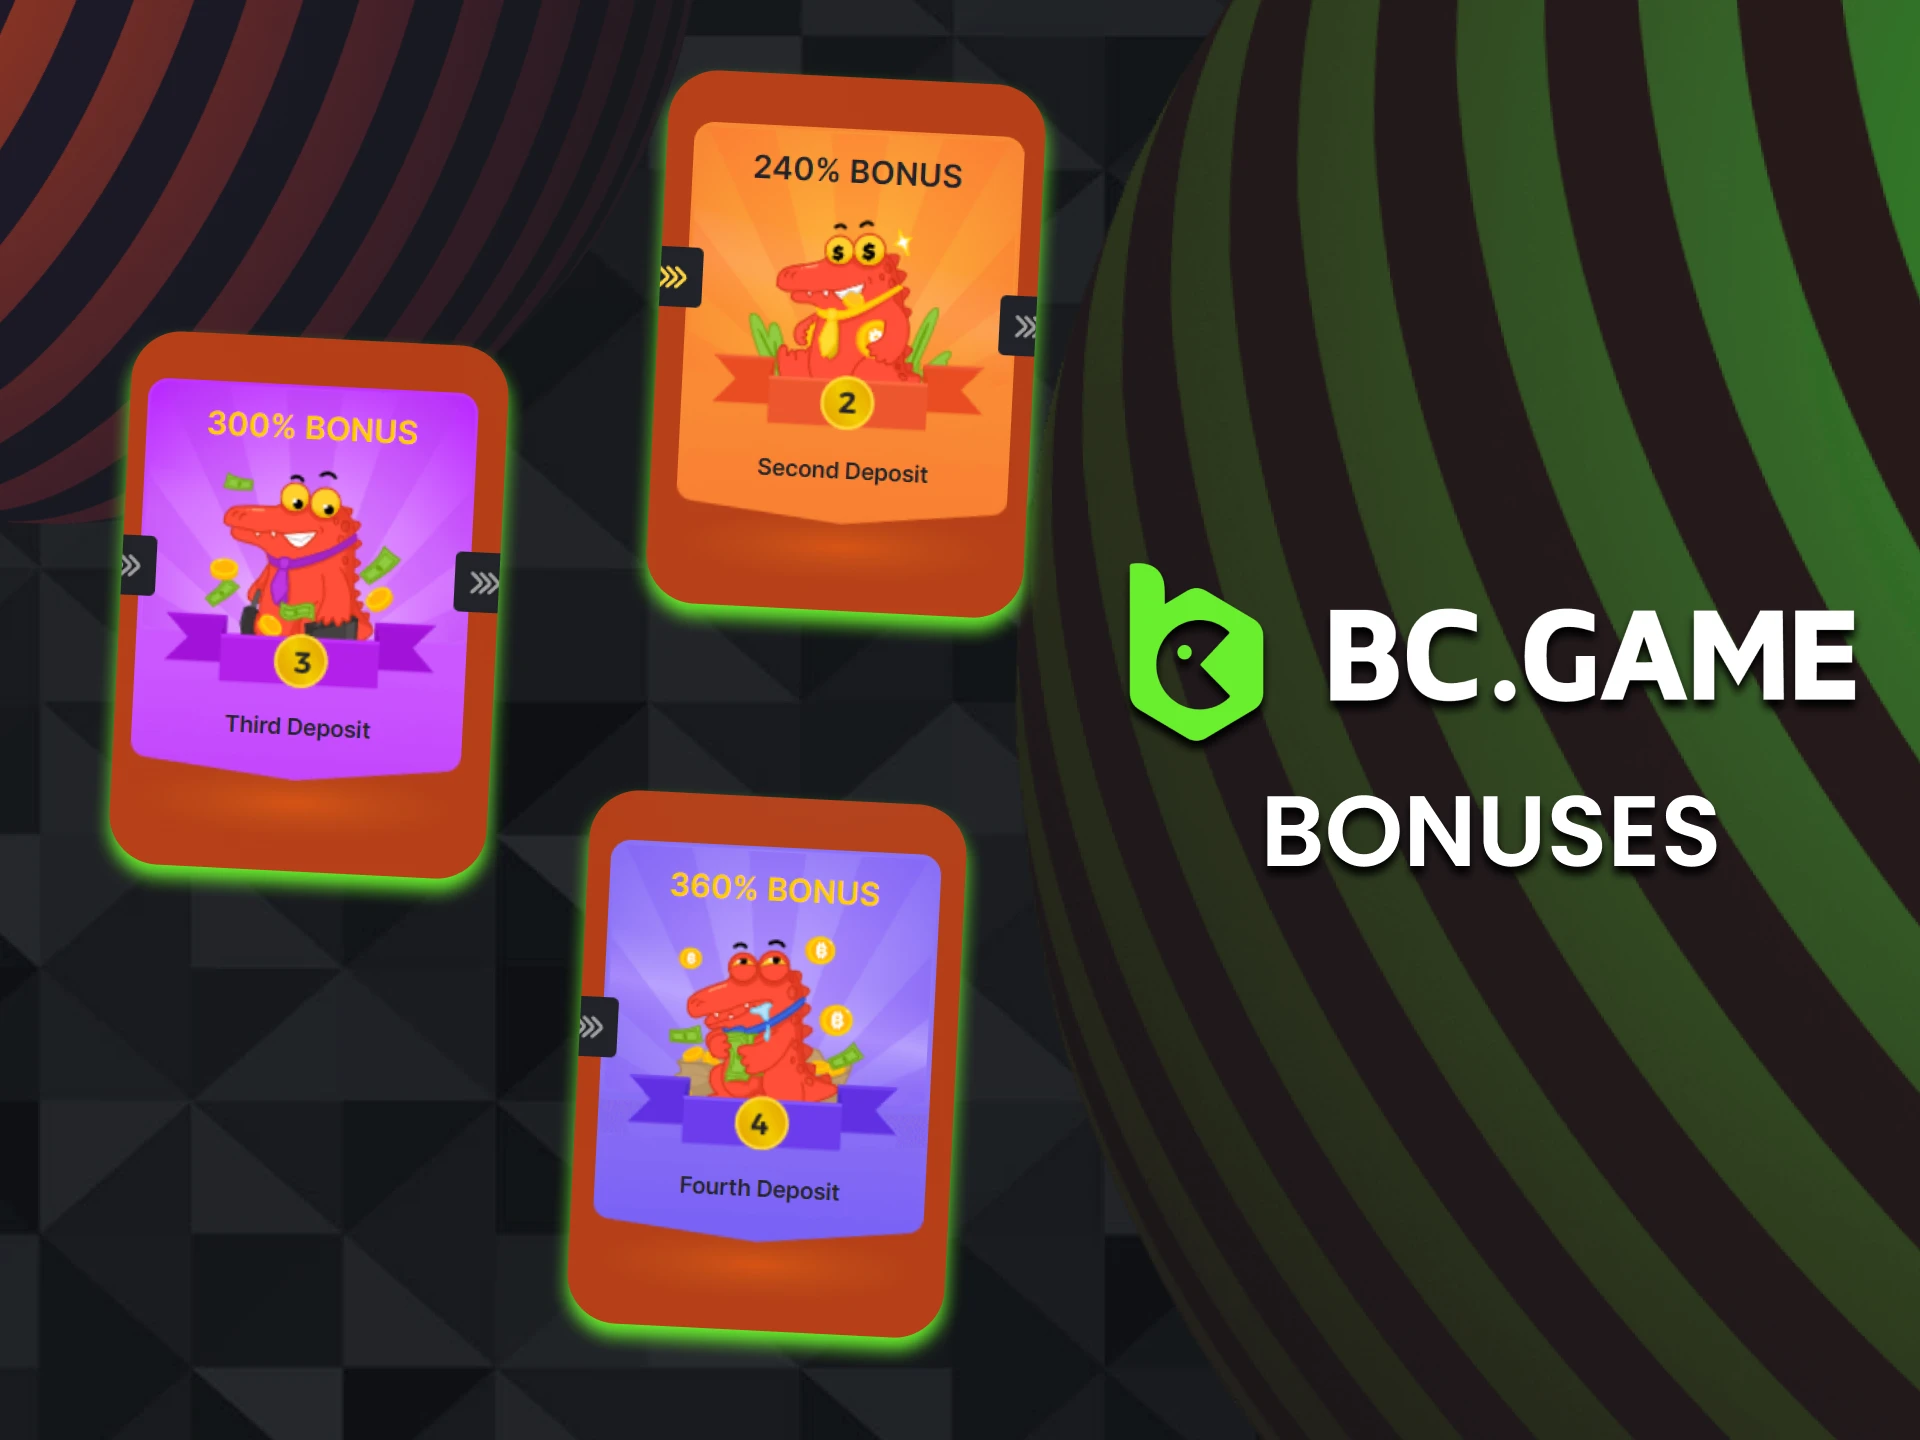 BC Game gives bonuses for playing baccarat.